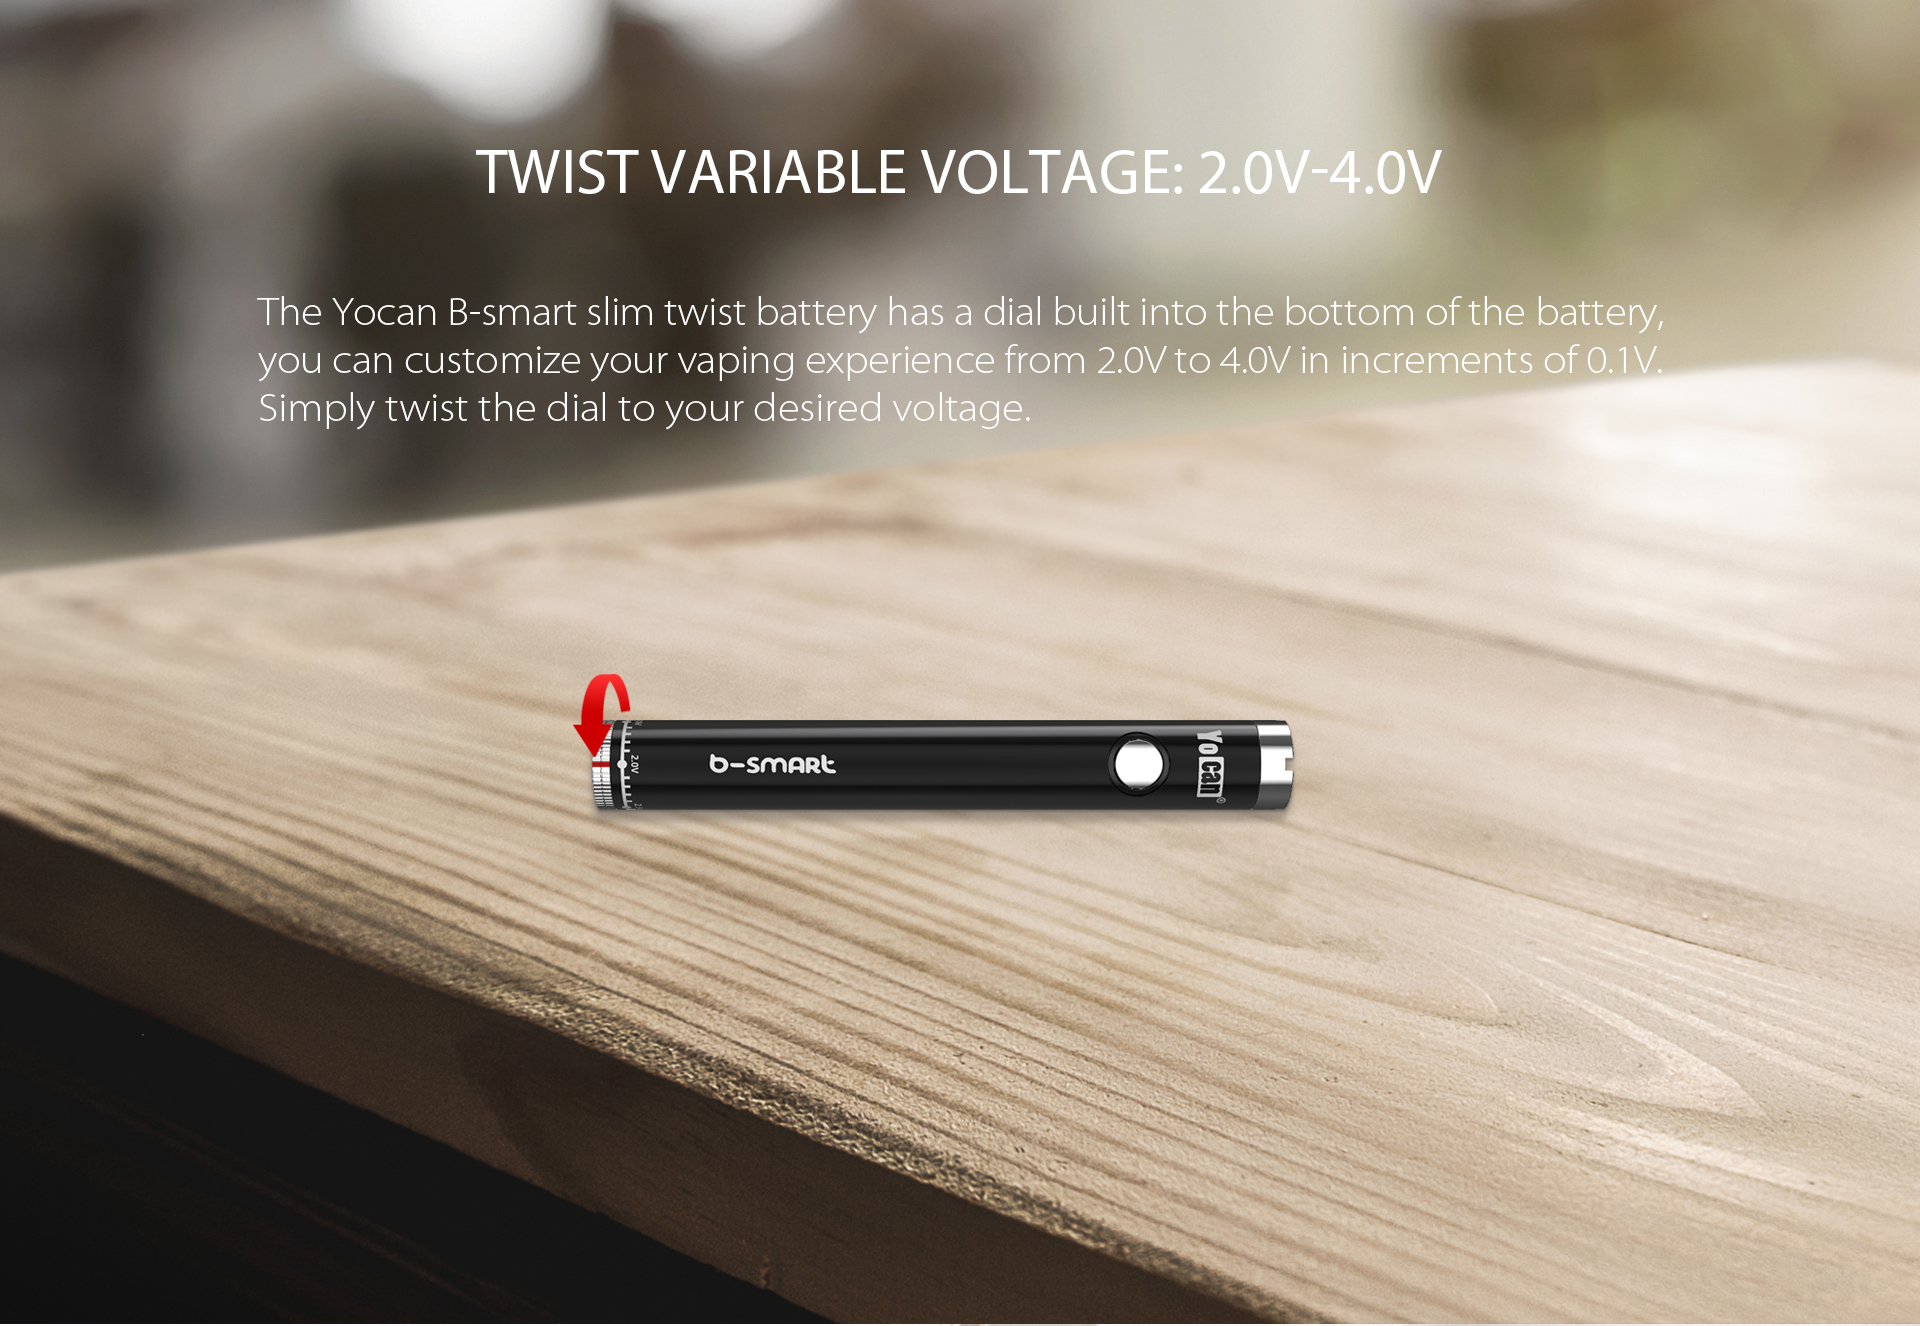 Yocan B-smart Twist VV Slim Vape Pen Battery voltage from 2.0v to 4.0v.